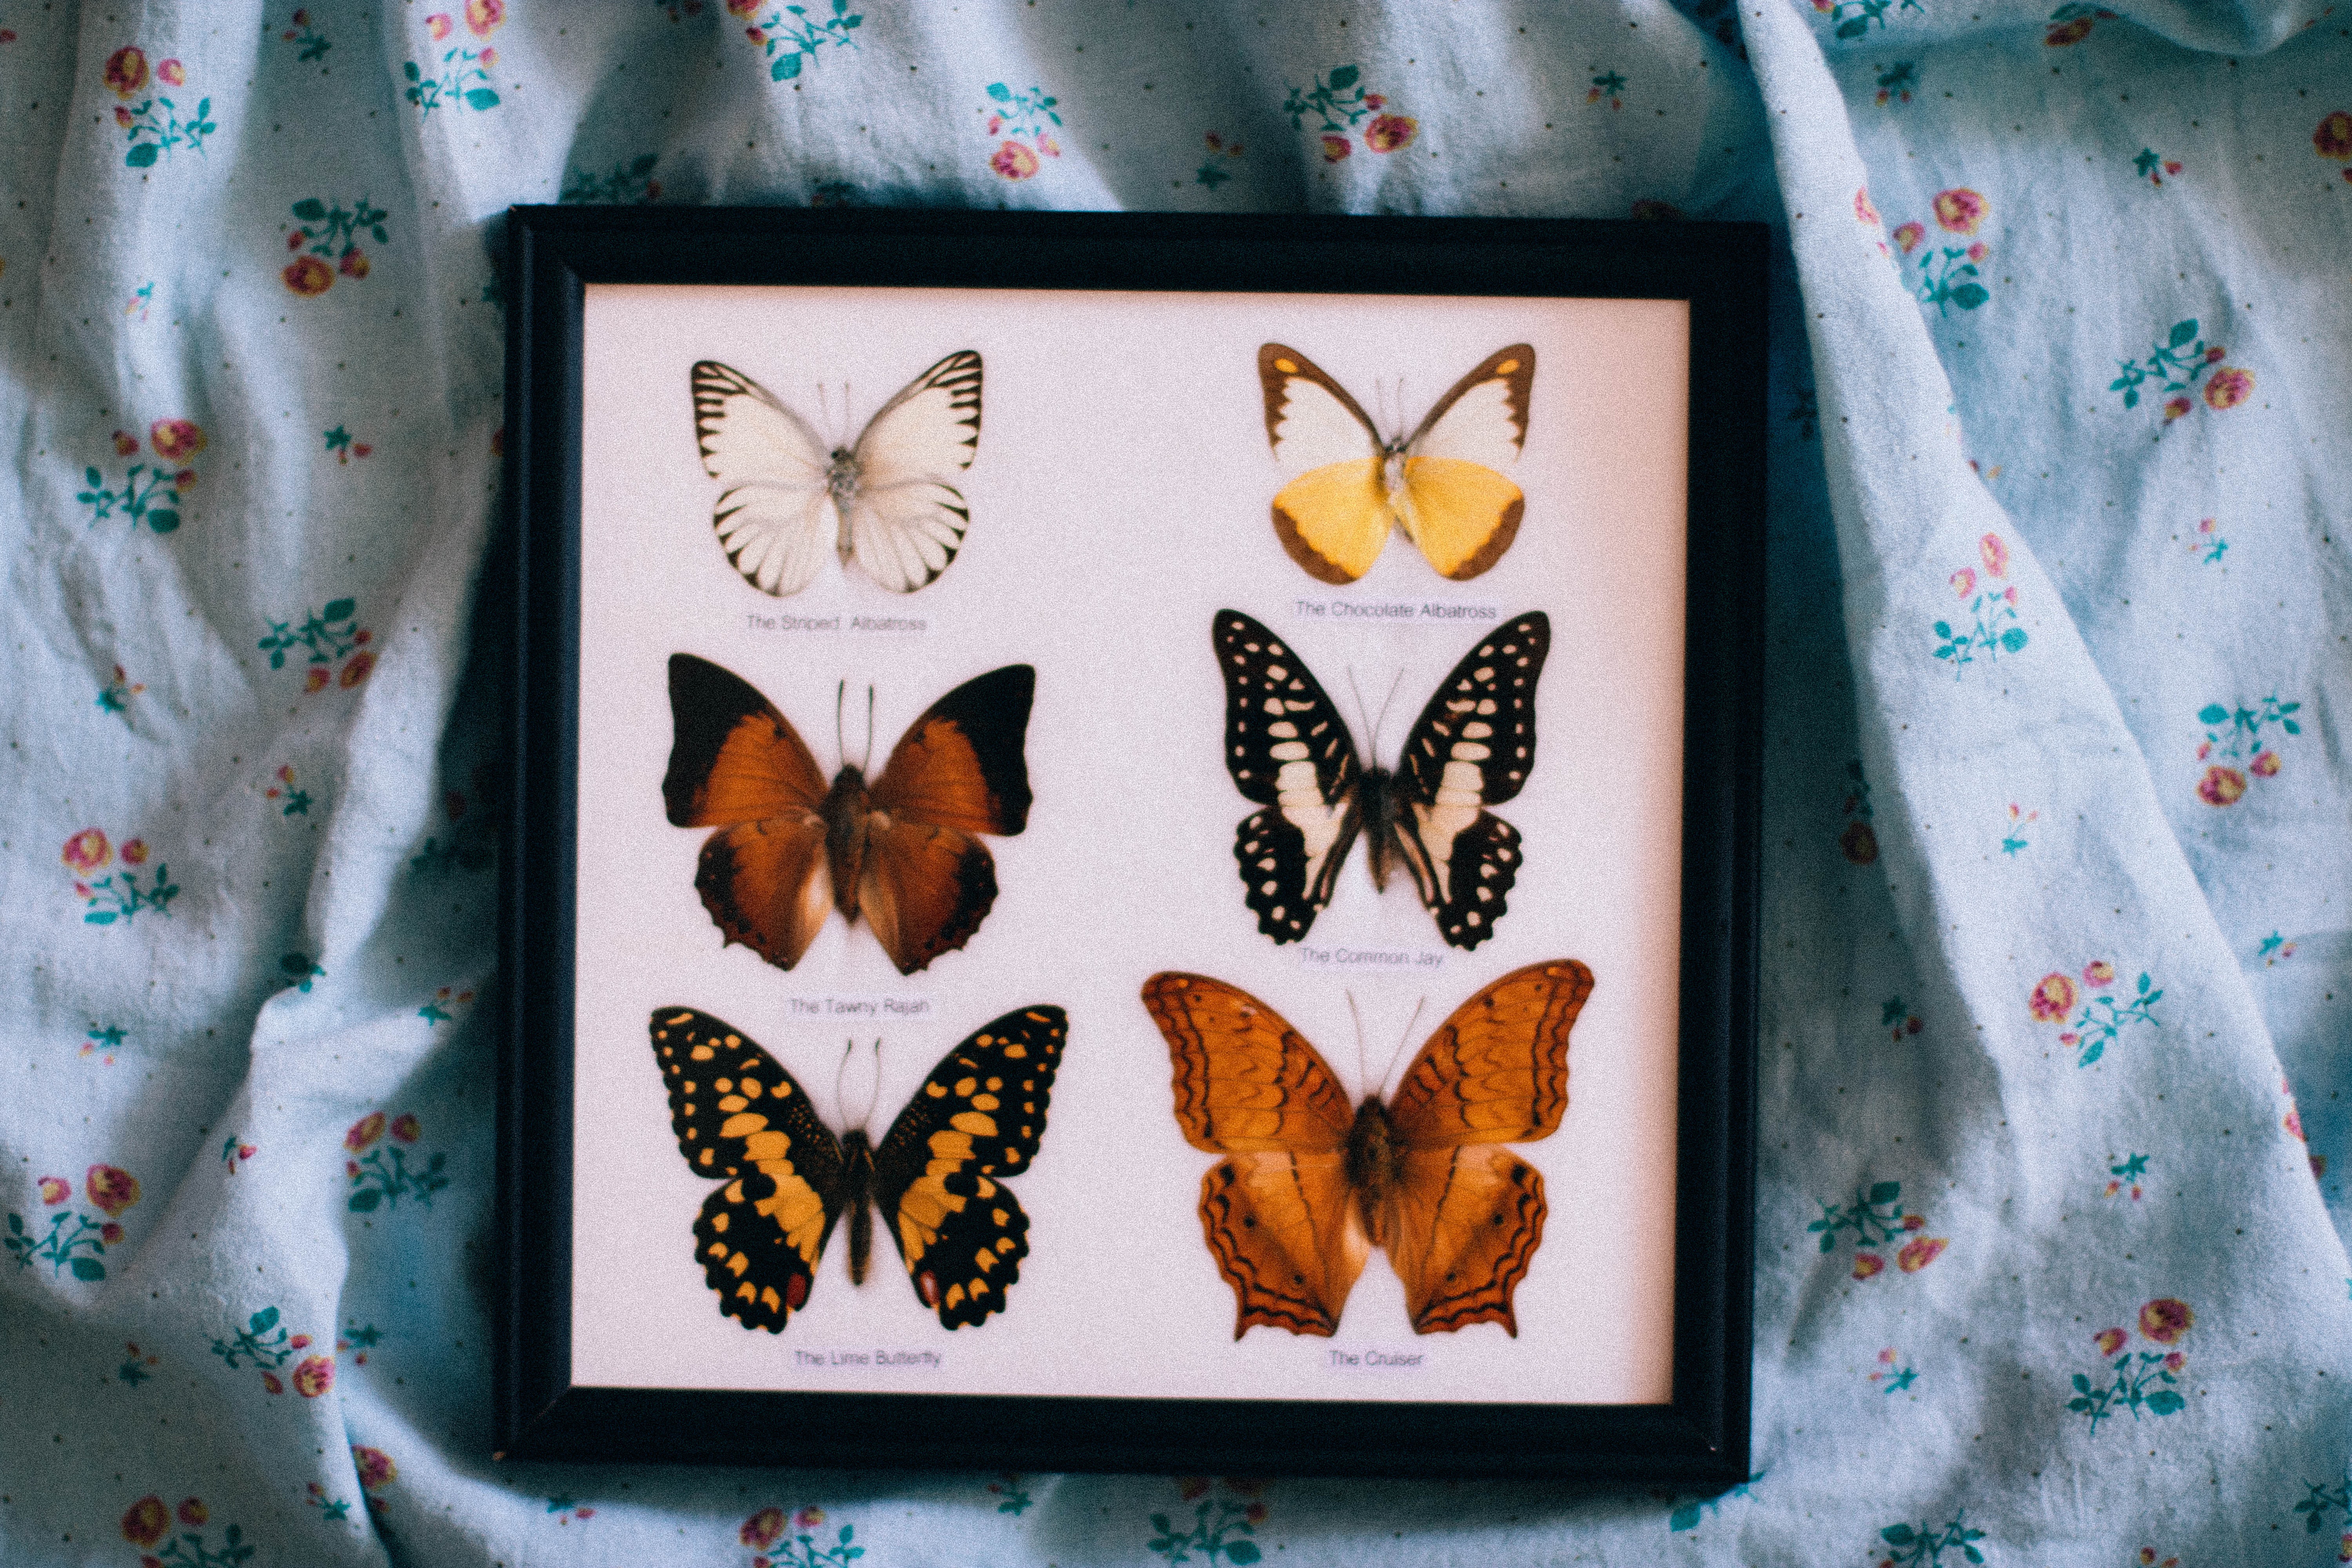 Black wooden framed shadow box of butterflies photo